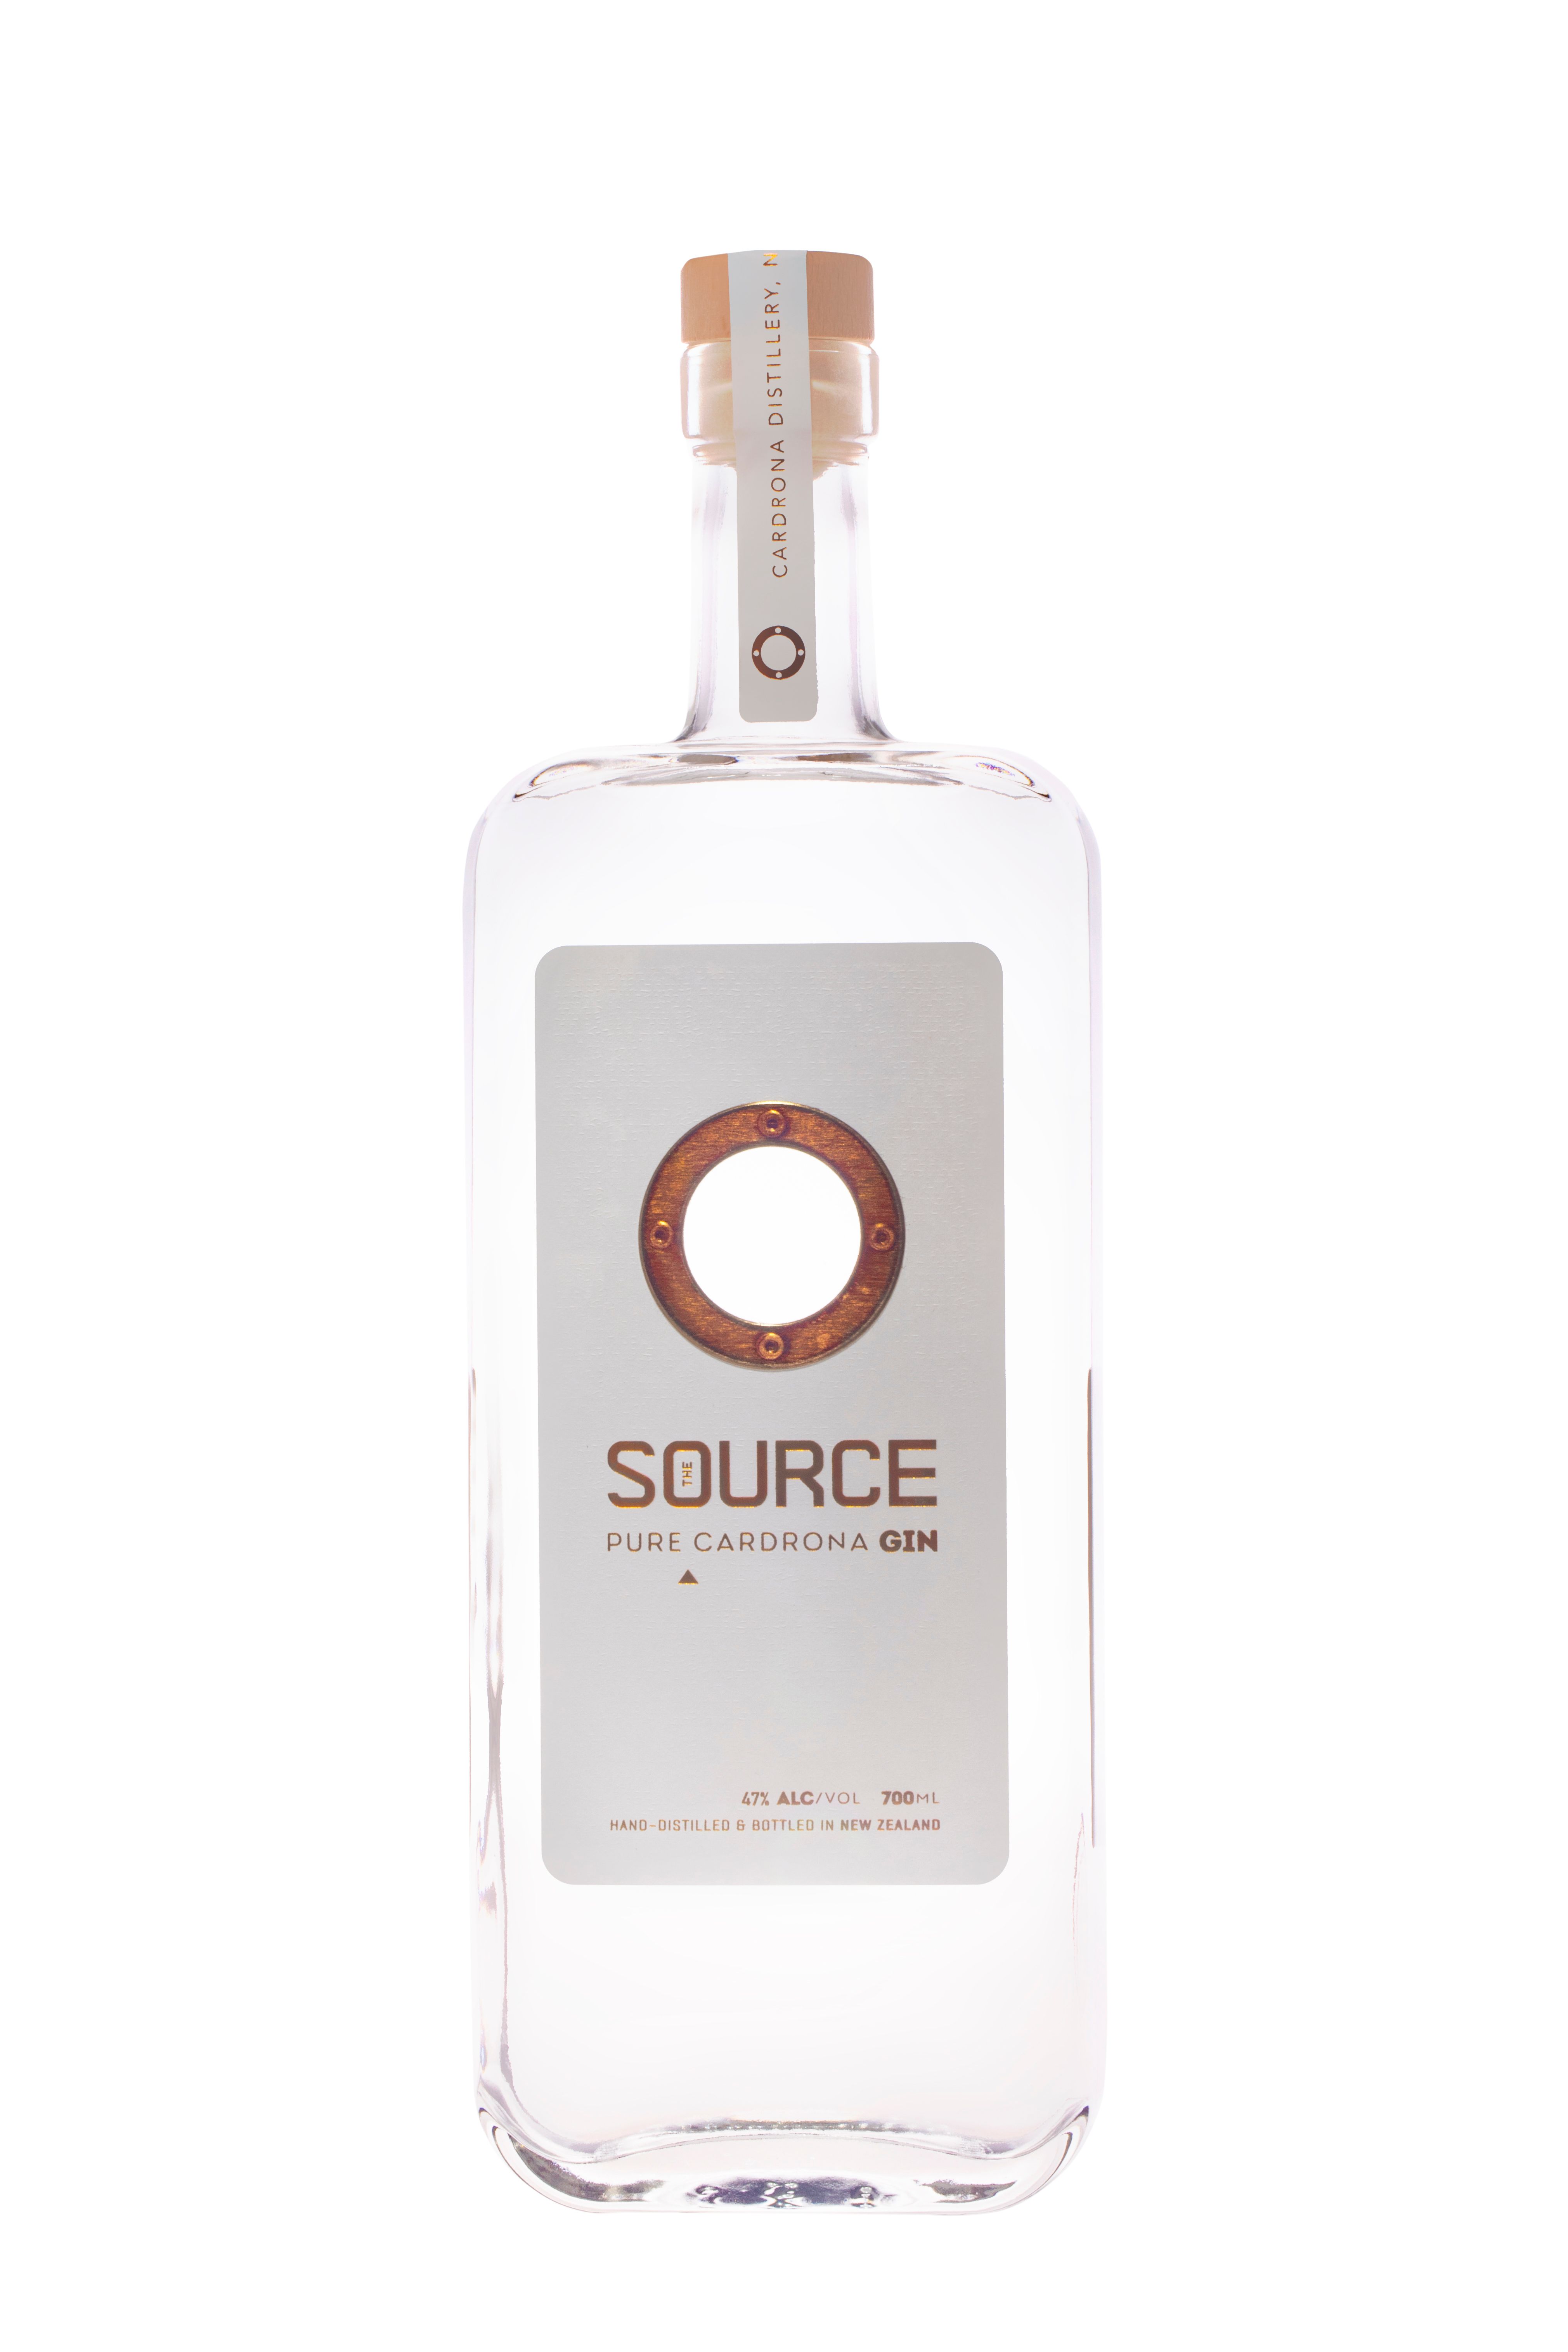 'The Source' Cardrona Gin